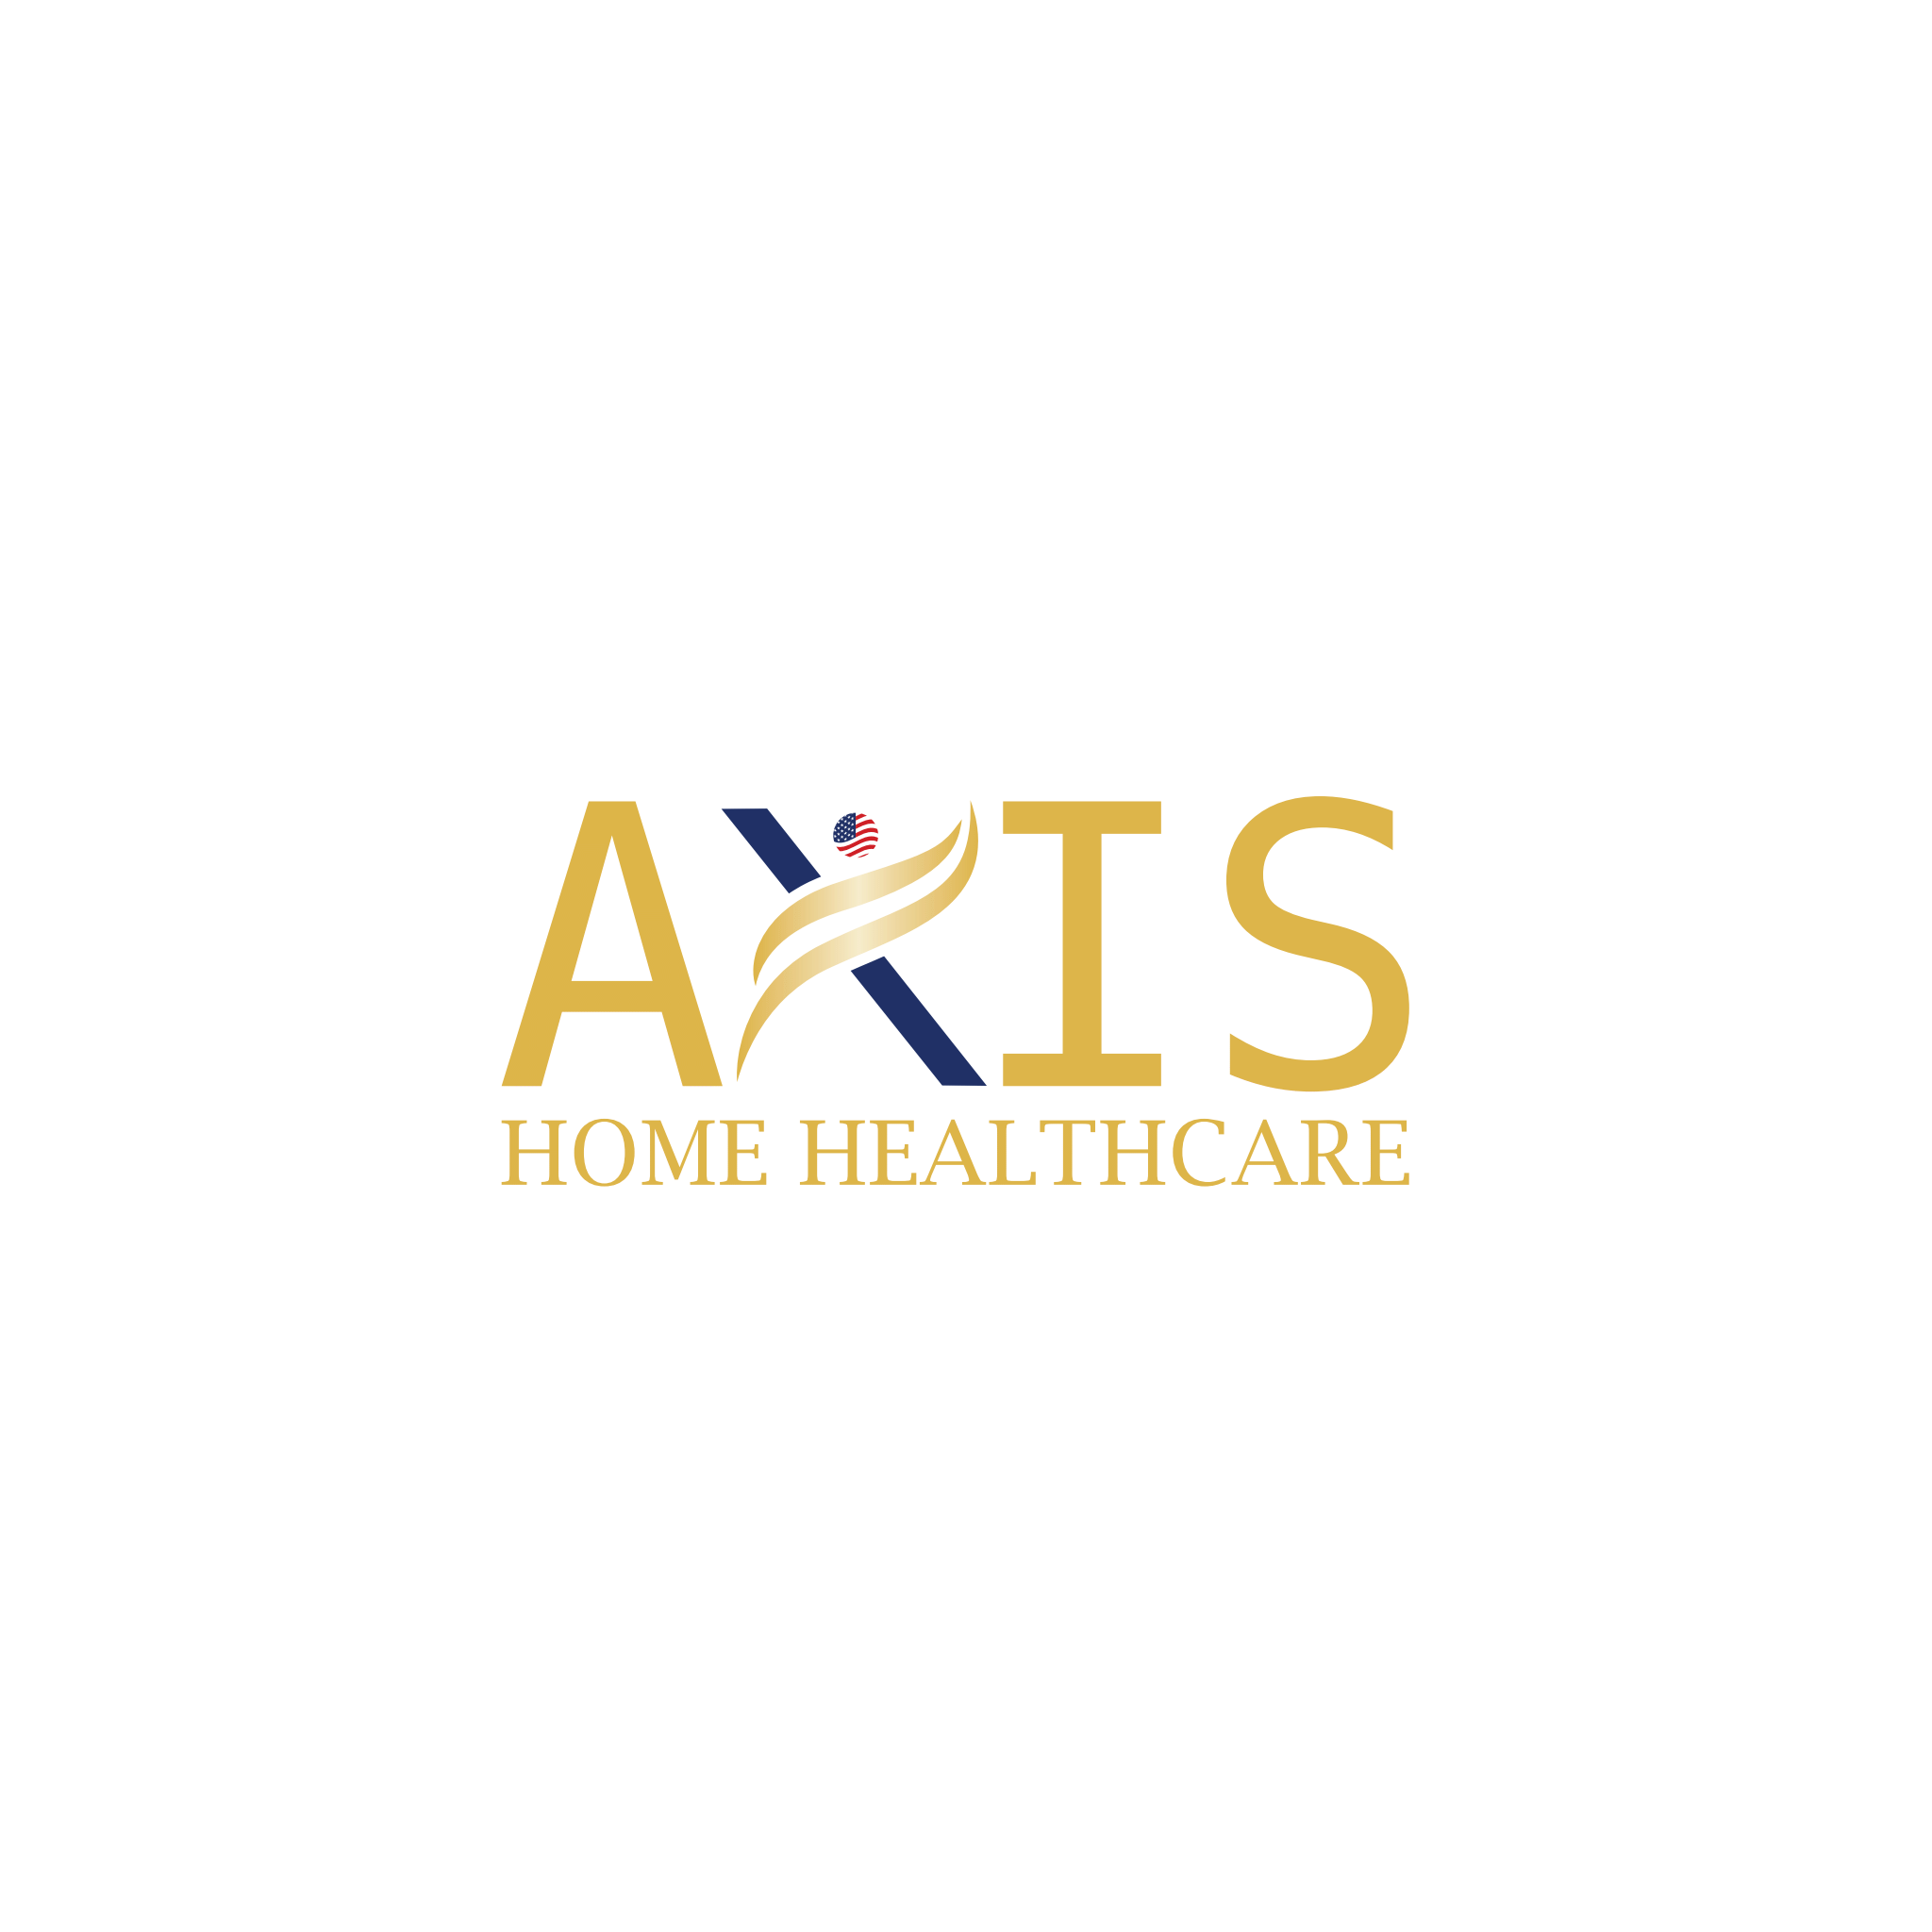 Axis Home Healthcare